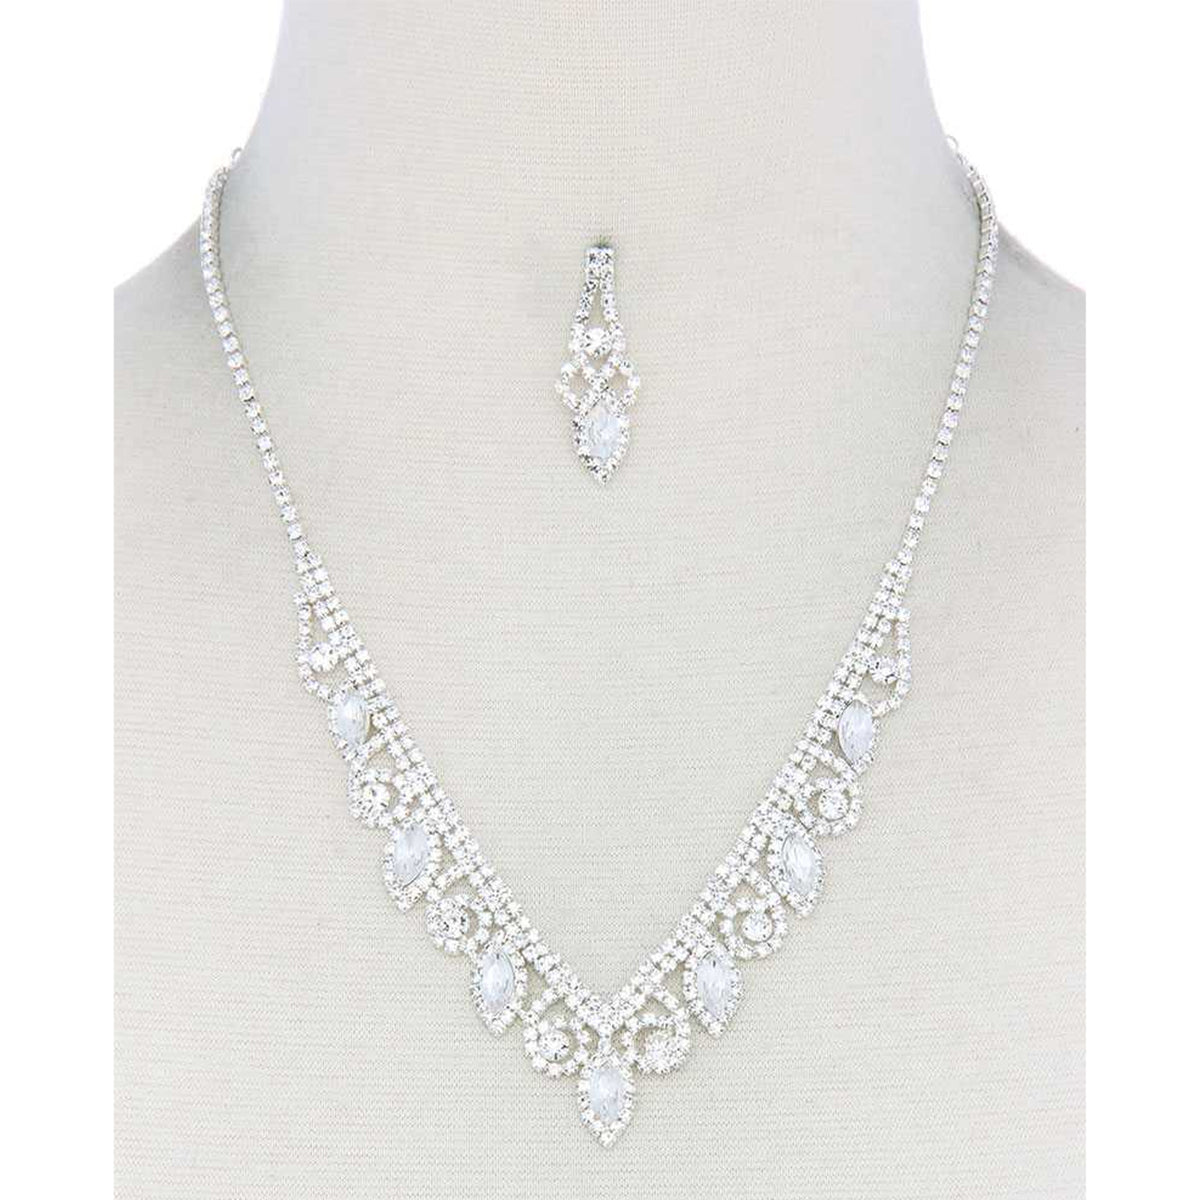 Rhinestone Necklace for Women in Silver